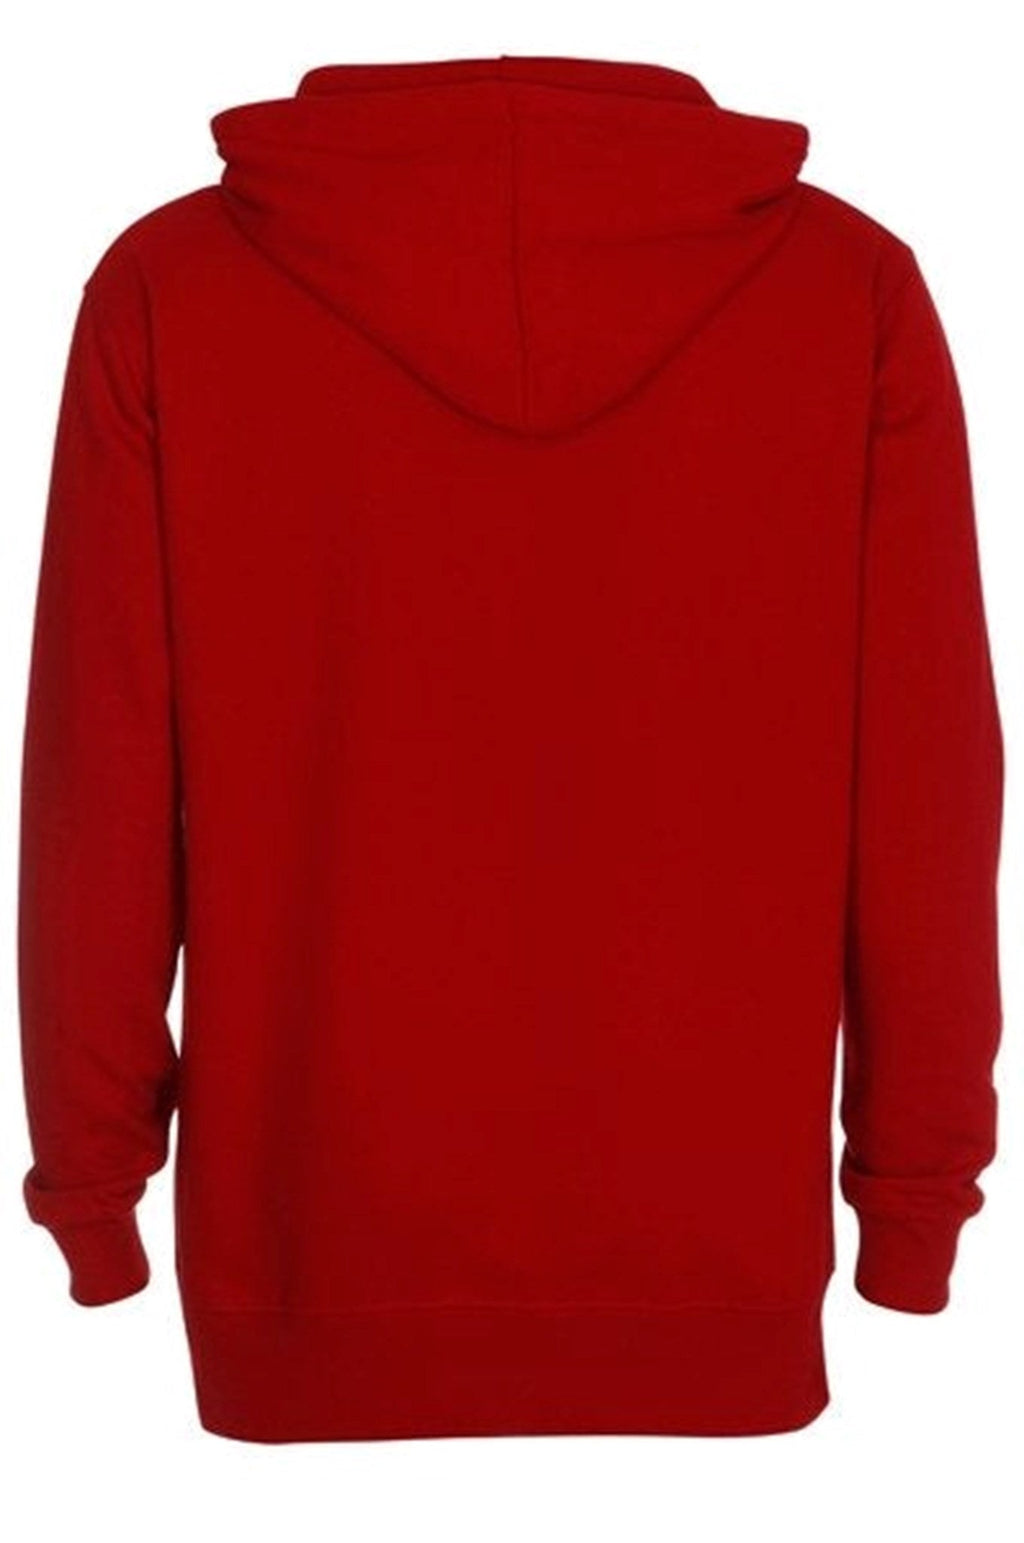 Basic Megztinis - raudonas